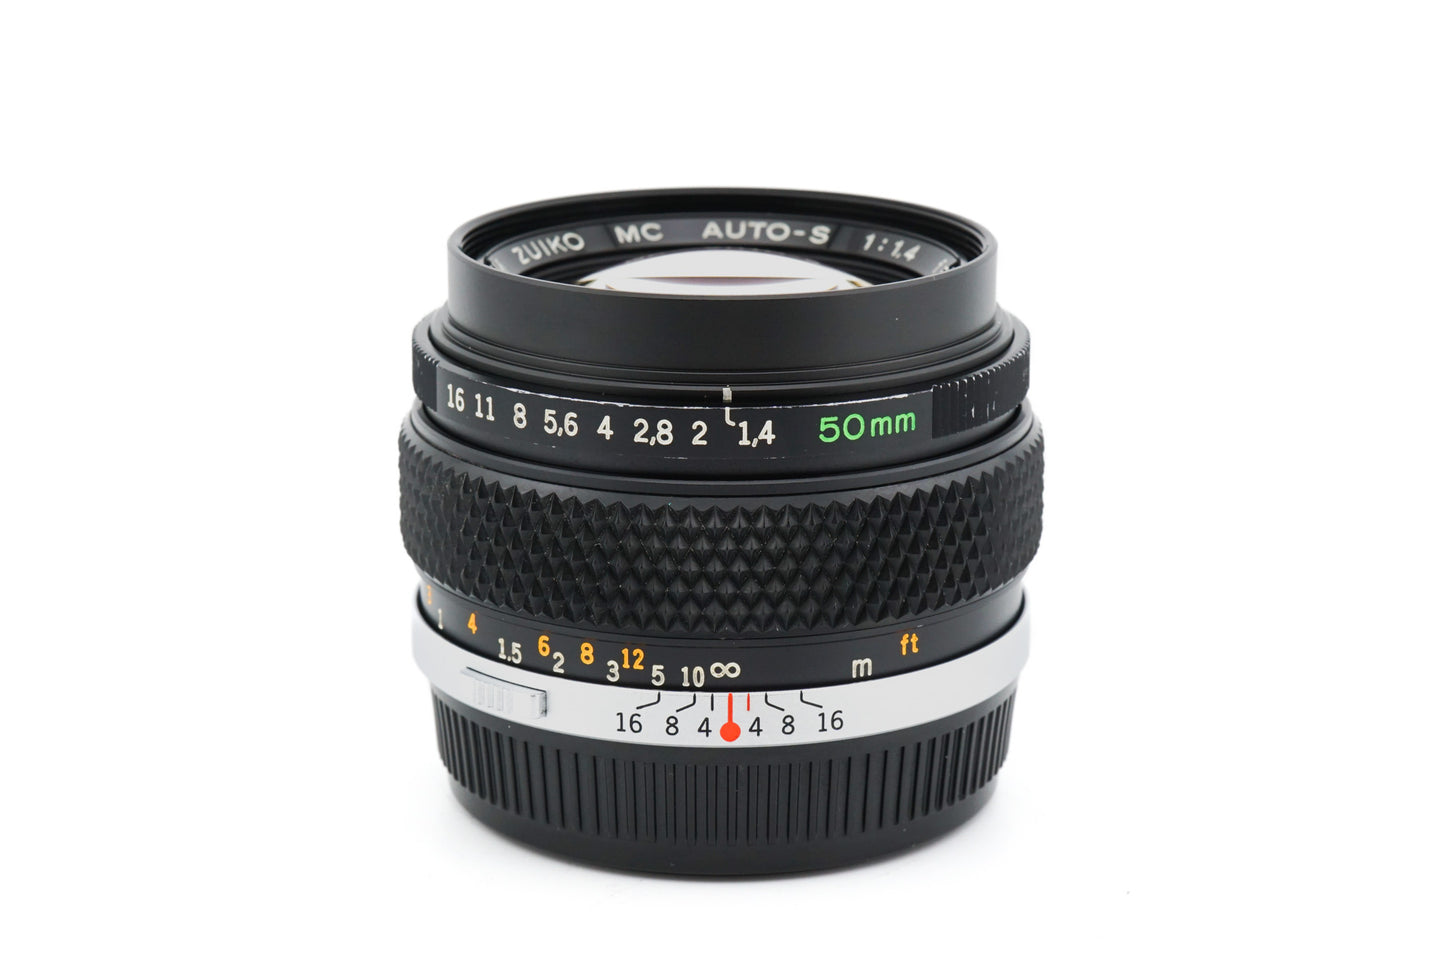 Olympus 50mm f1.4 Zuiko MC Auto-S - Lens